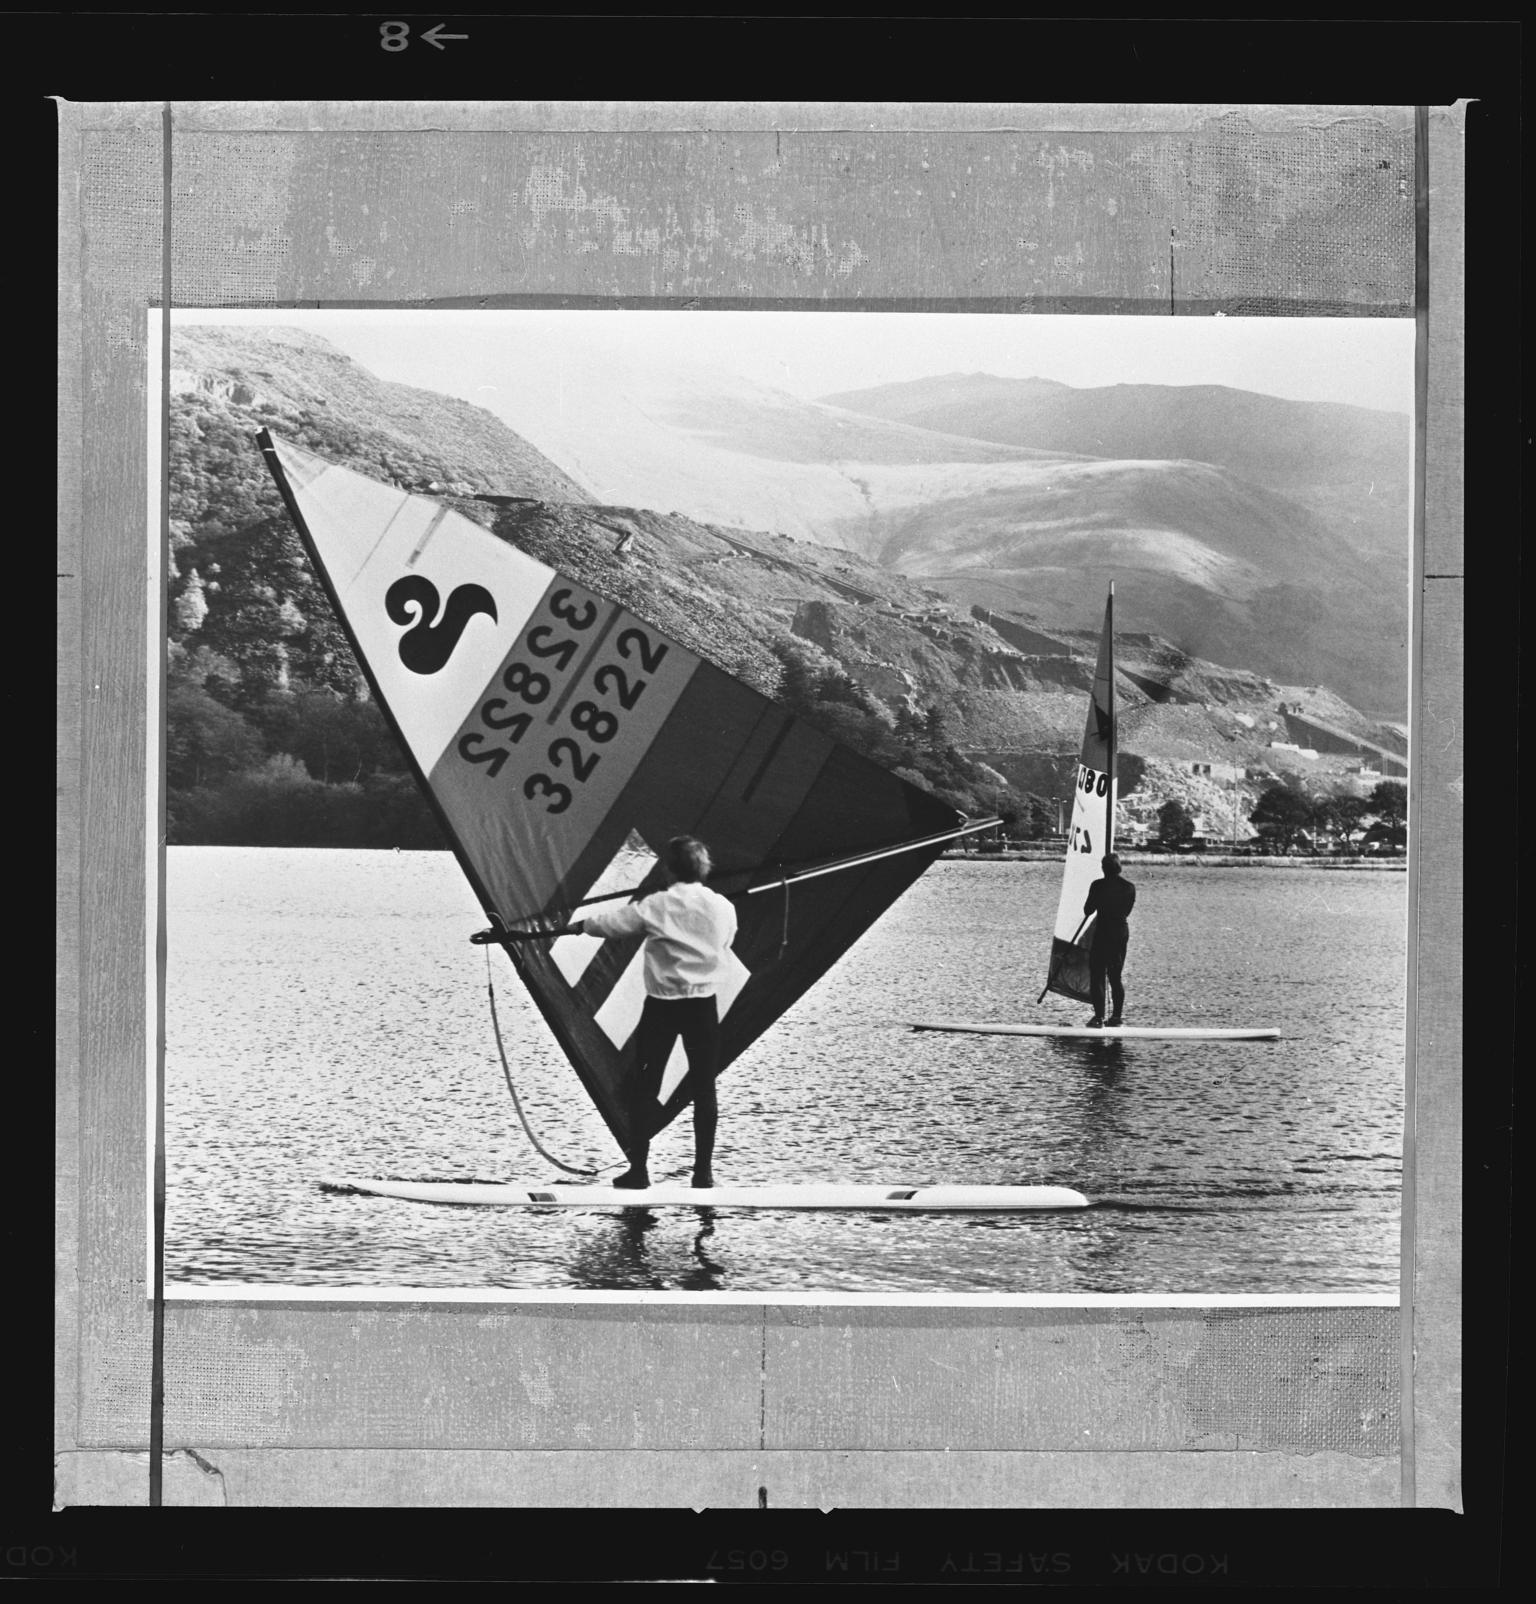 Padarn Lake, film negative